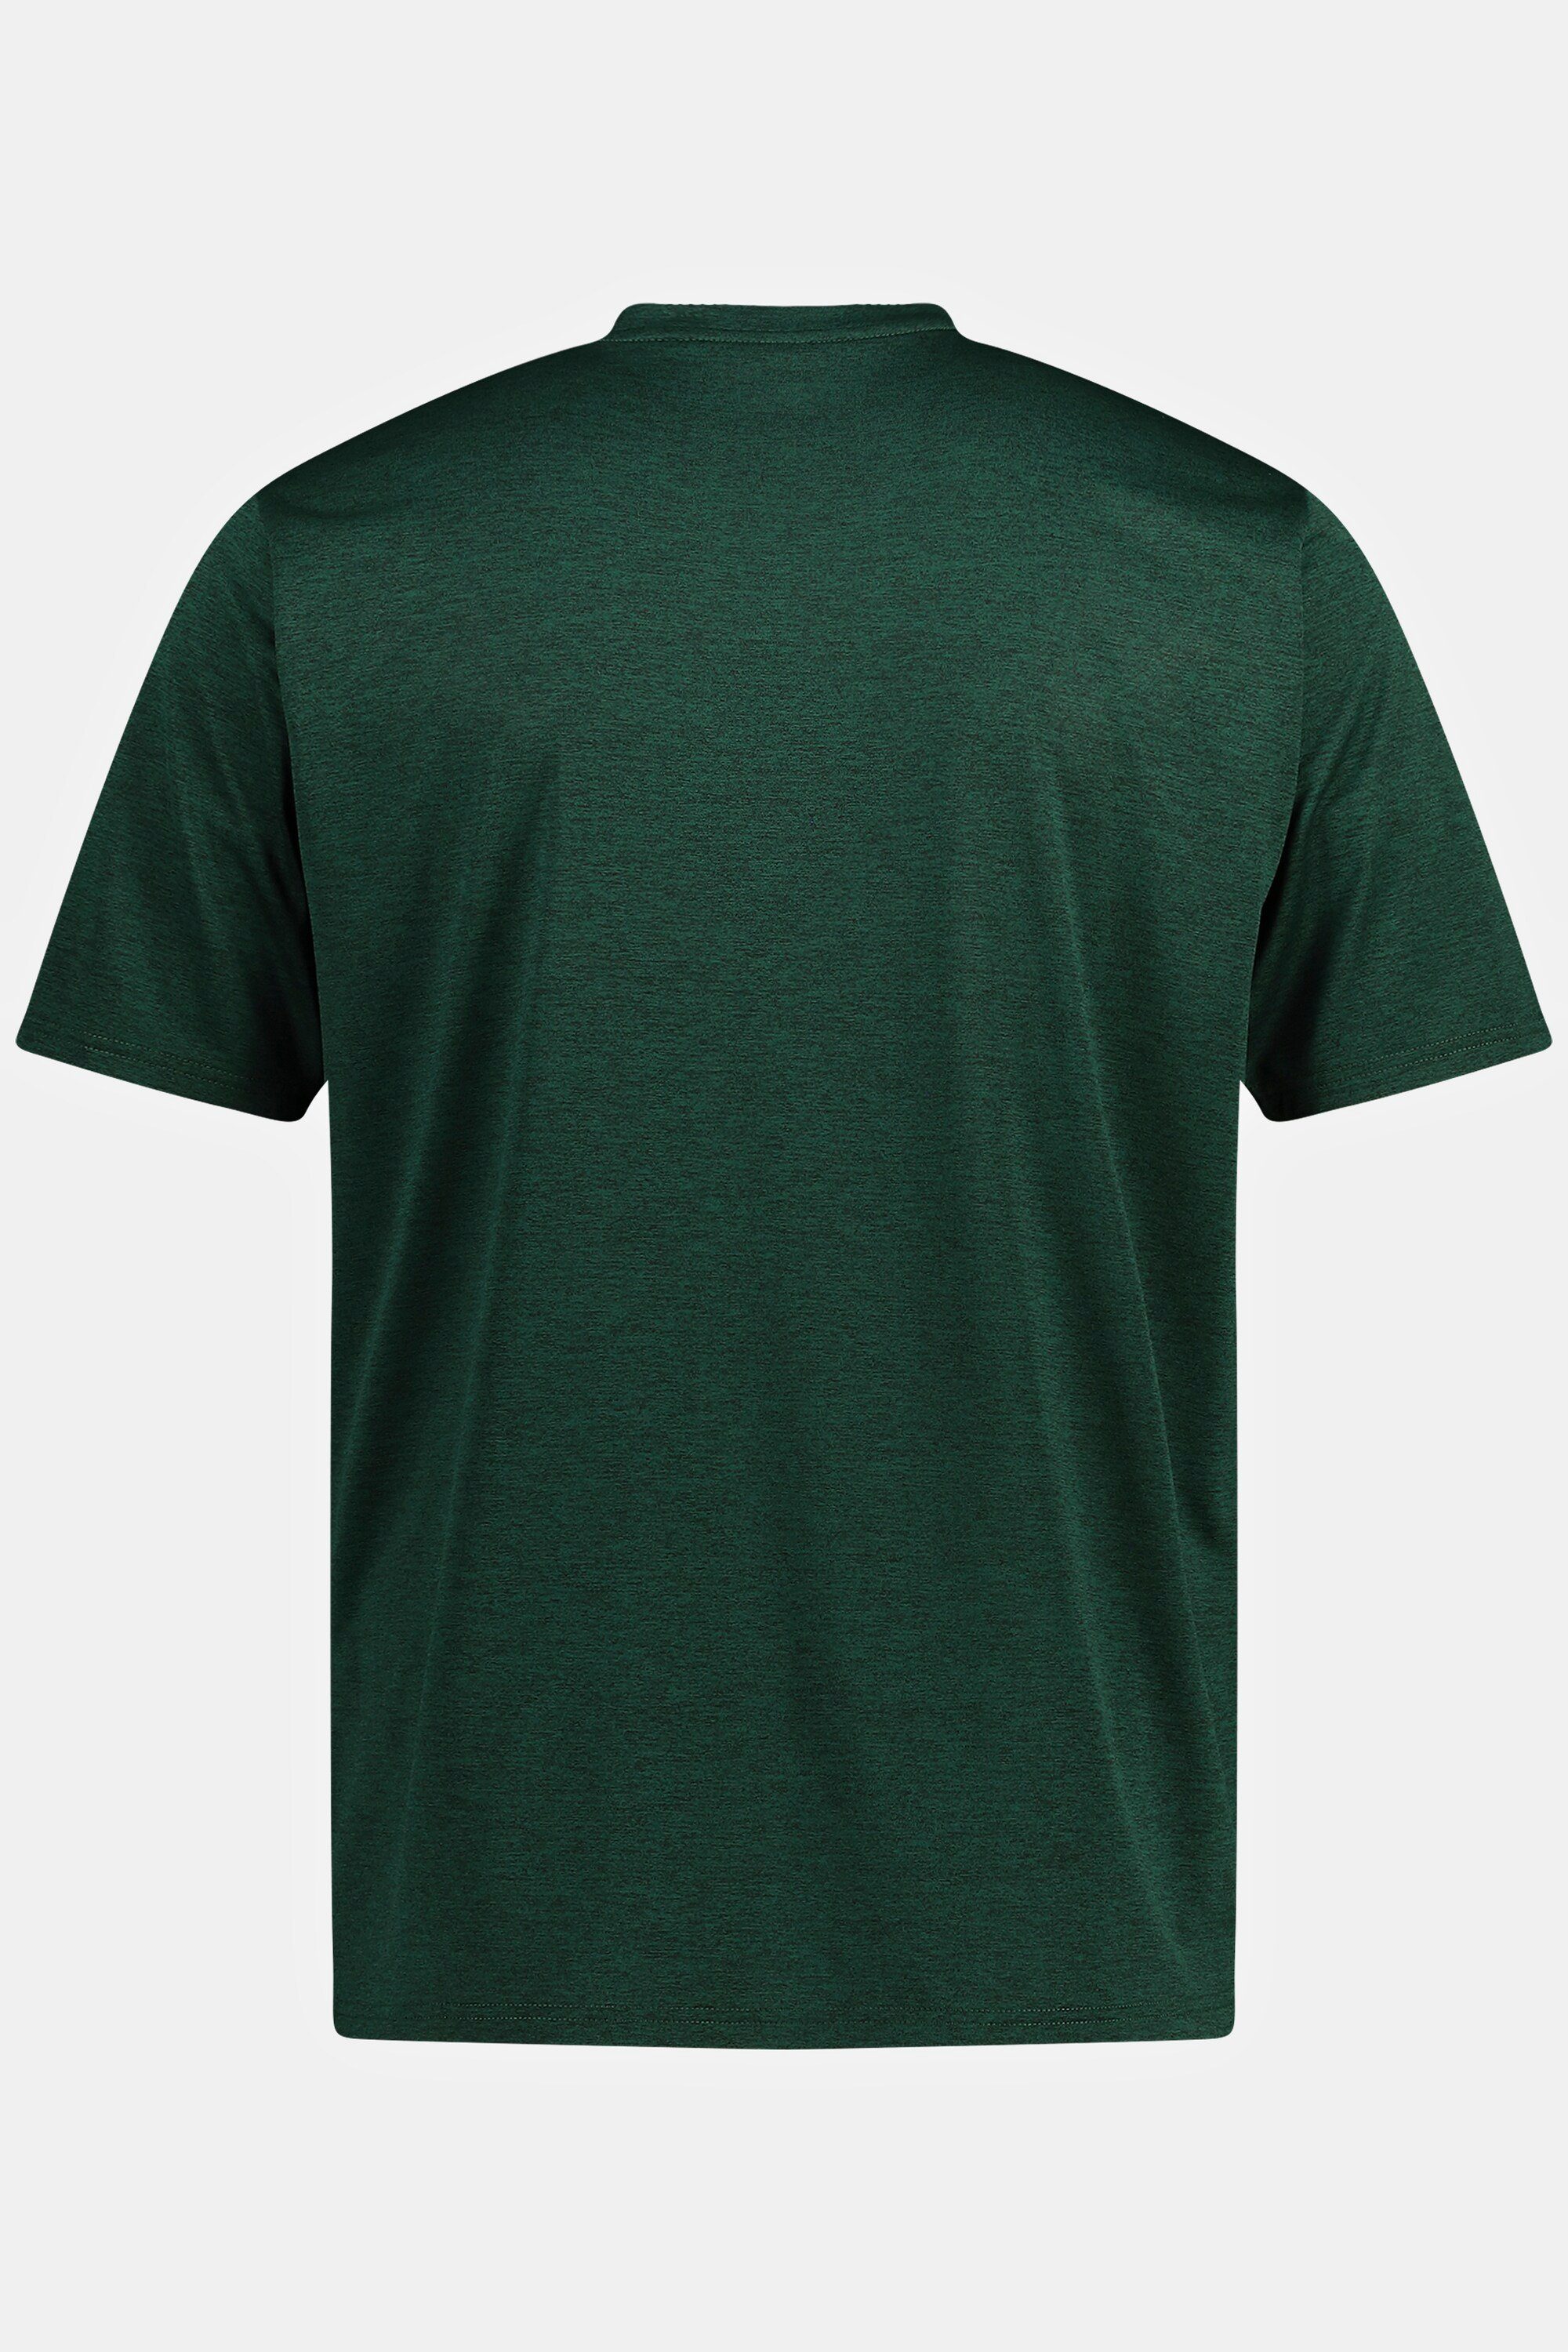 JP1880 T-Shirt Funktions-Shirt FLEXNAMIC® flaschengrün Halbarm QuickDry